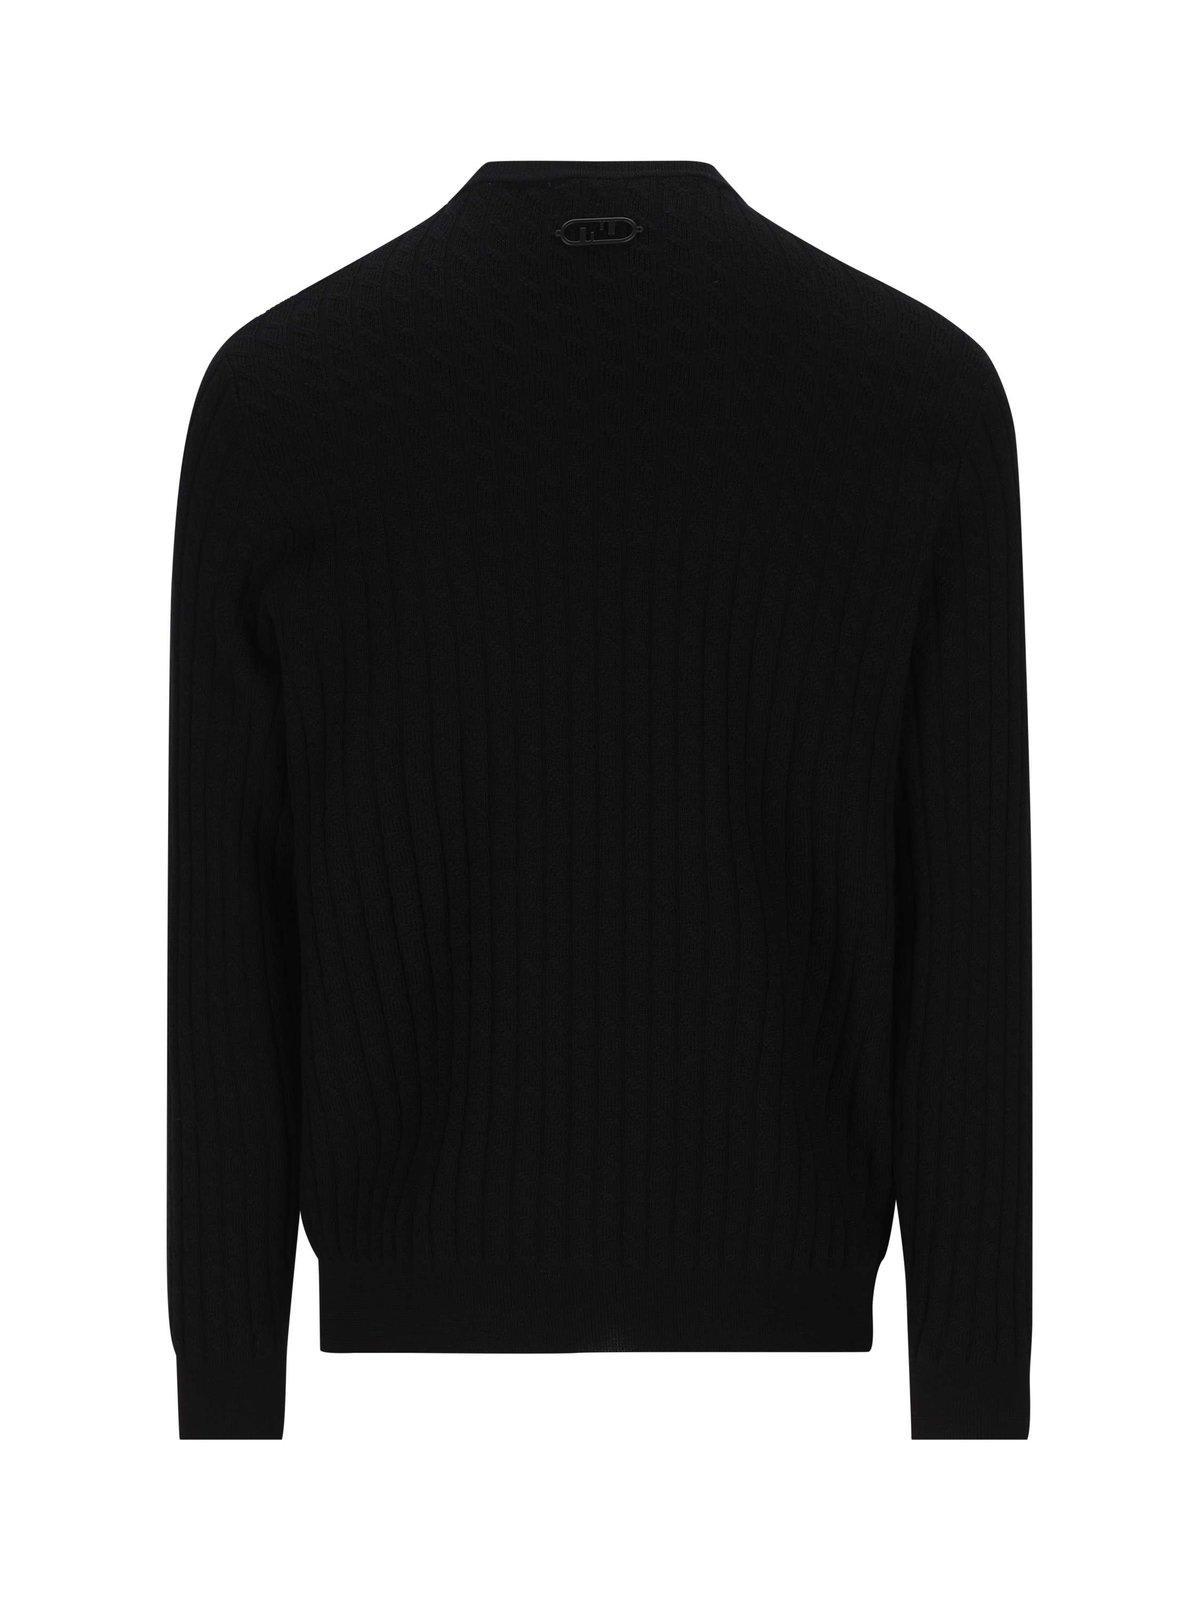 Fendi Cut-out Detailed Knit Jumper in Black for Men | Lyst